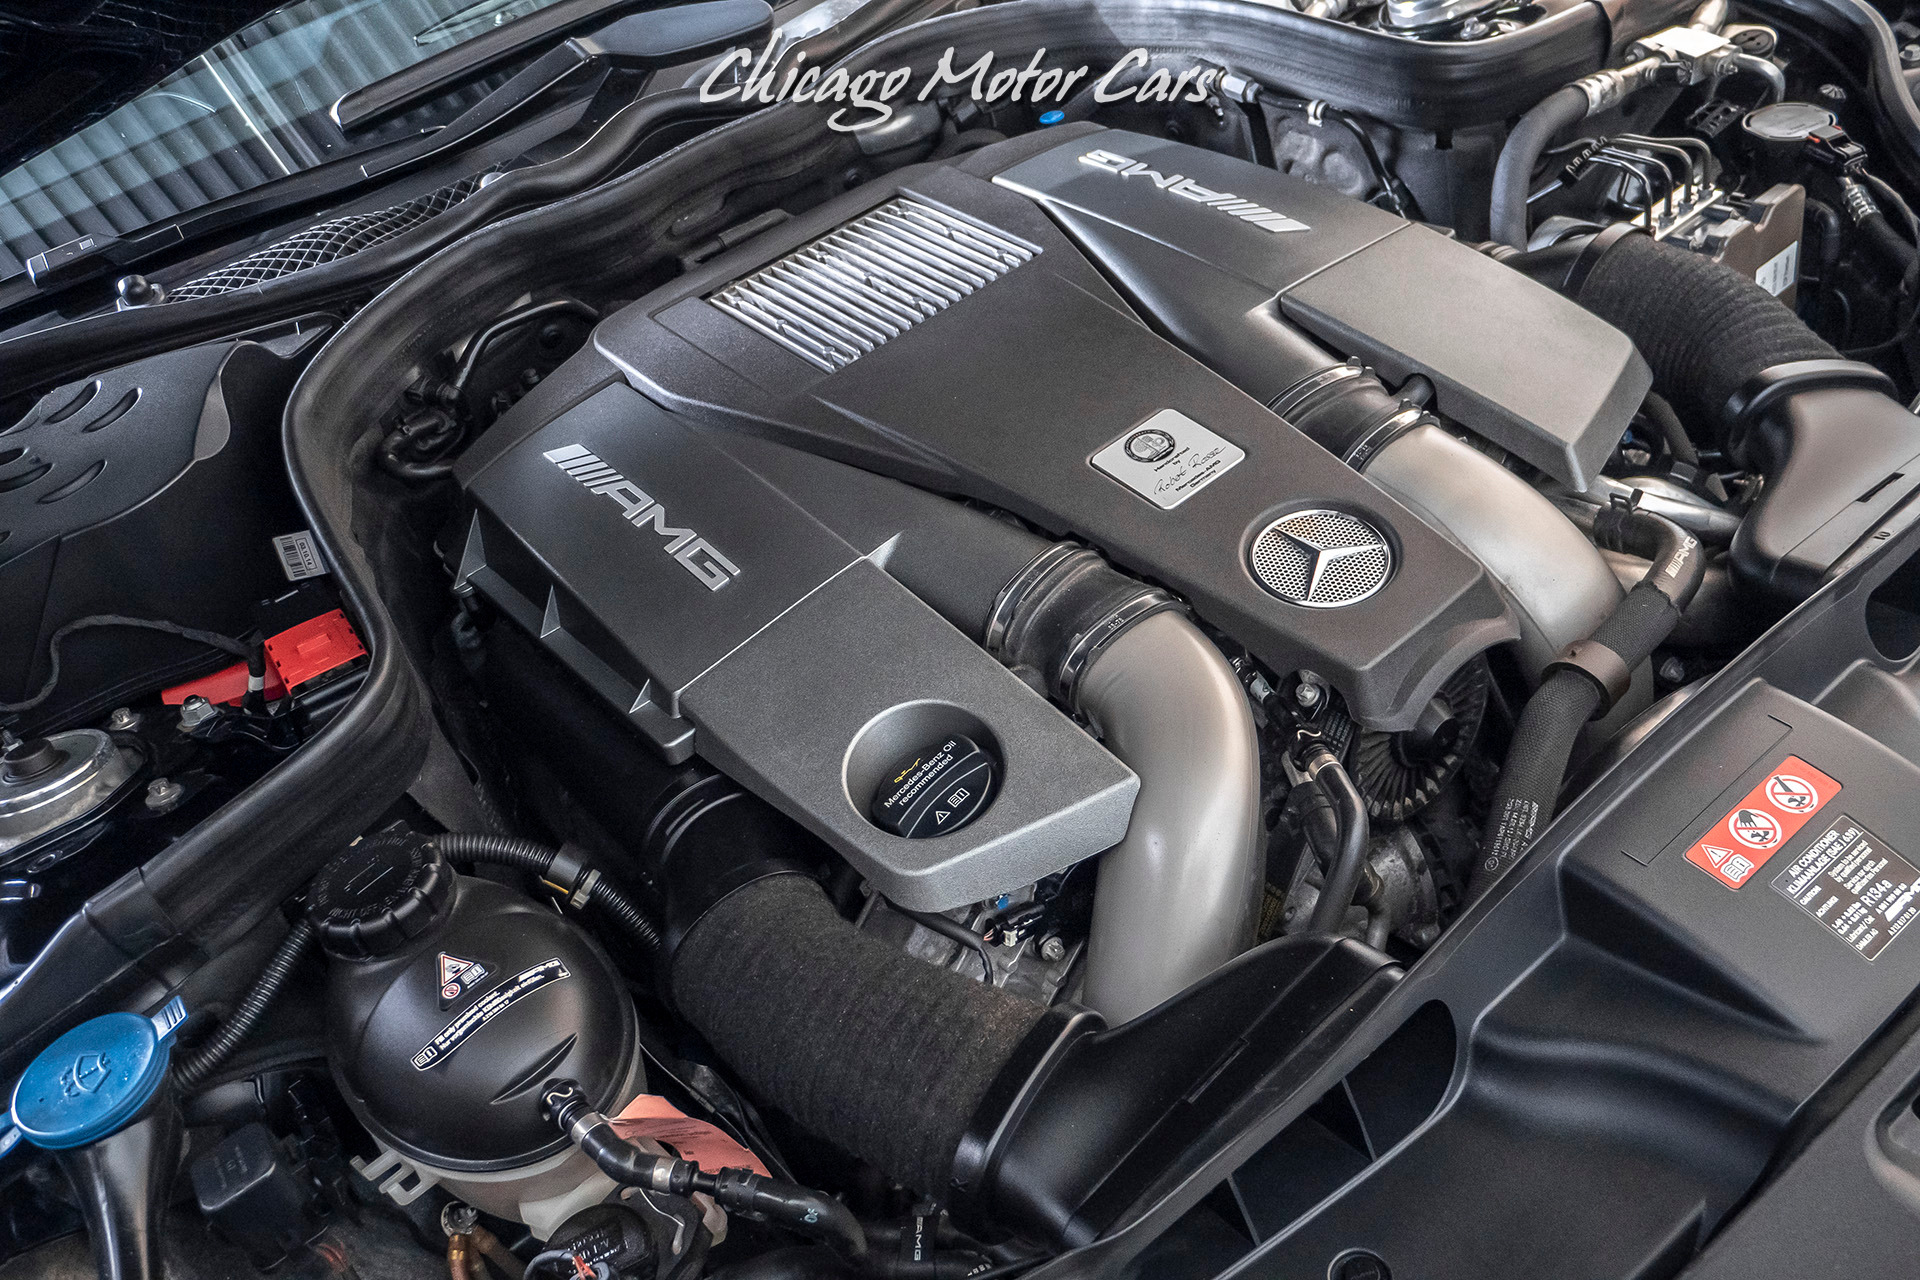 Used-2015-Mercedes-Benz-CLS63-AMG-S-4Matic-Sedan-PREMIUM-PACKAGE